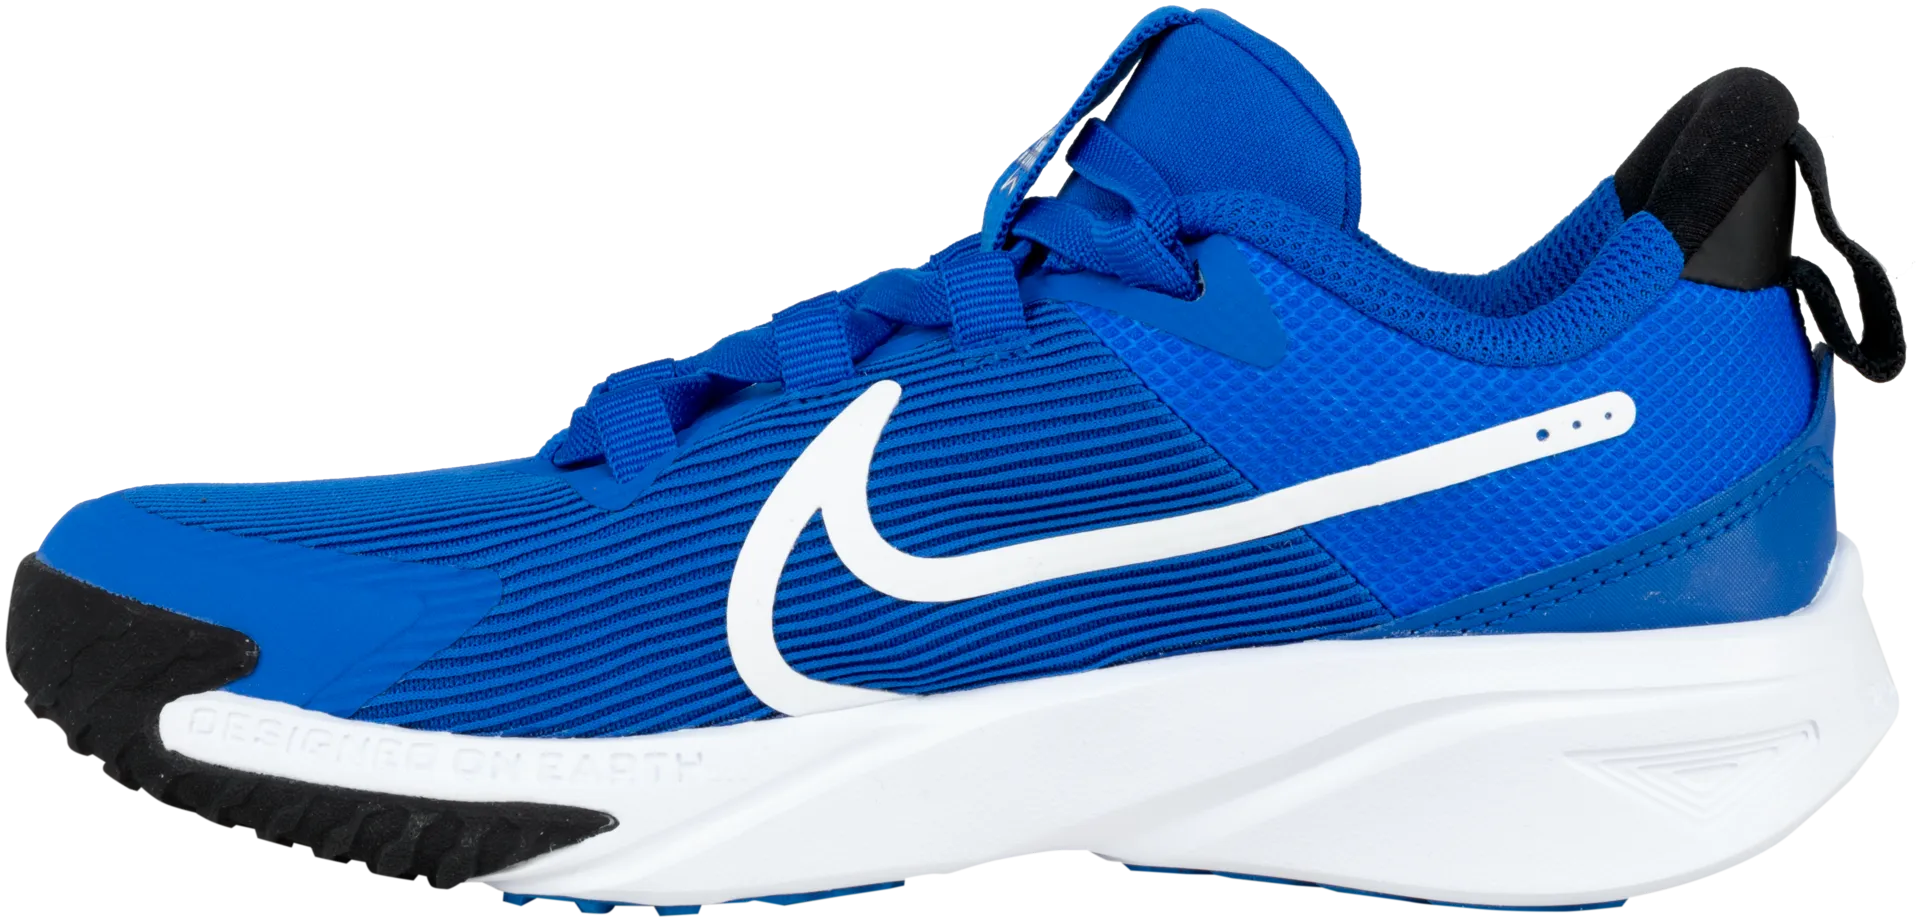 Nike lasten juoksujalkineet Star Runner - Blue - 3